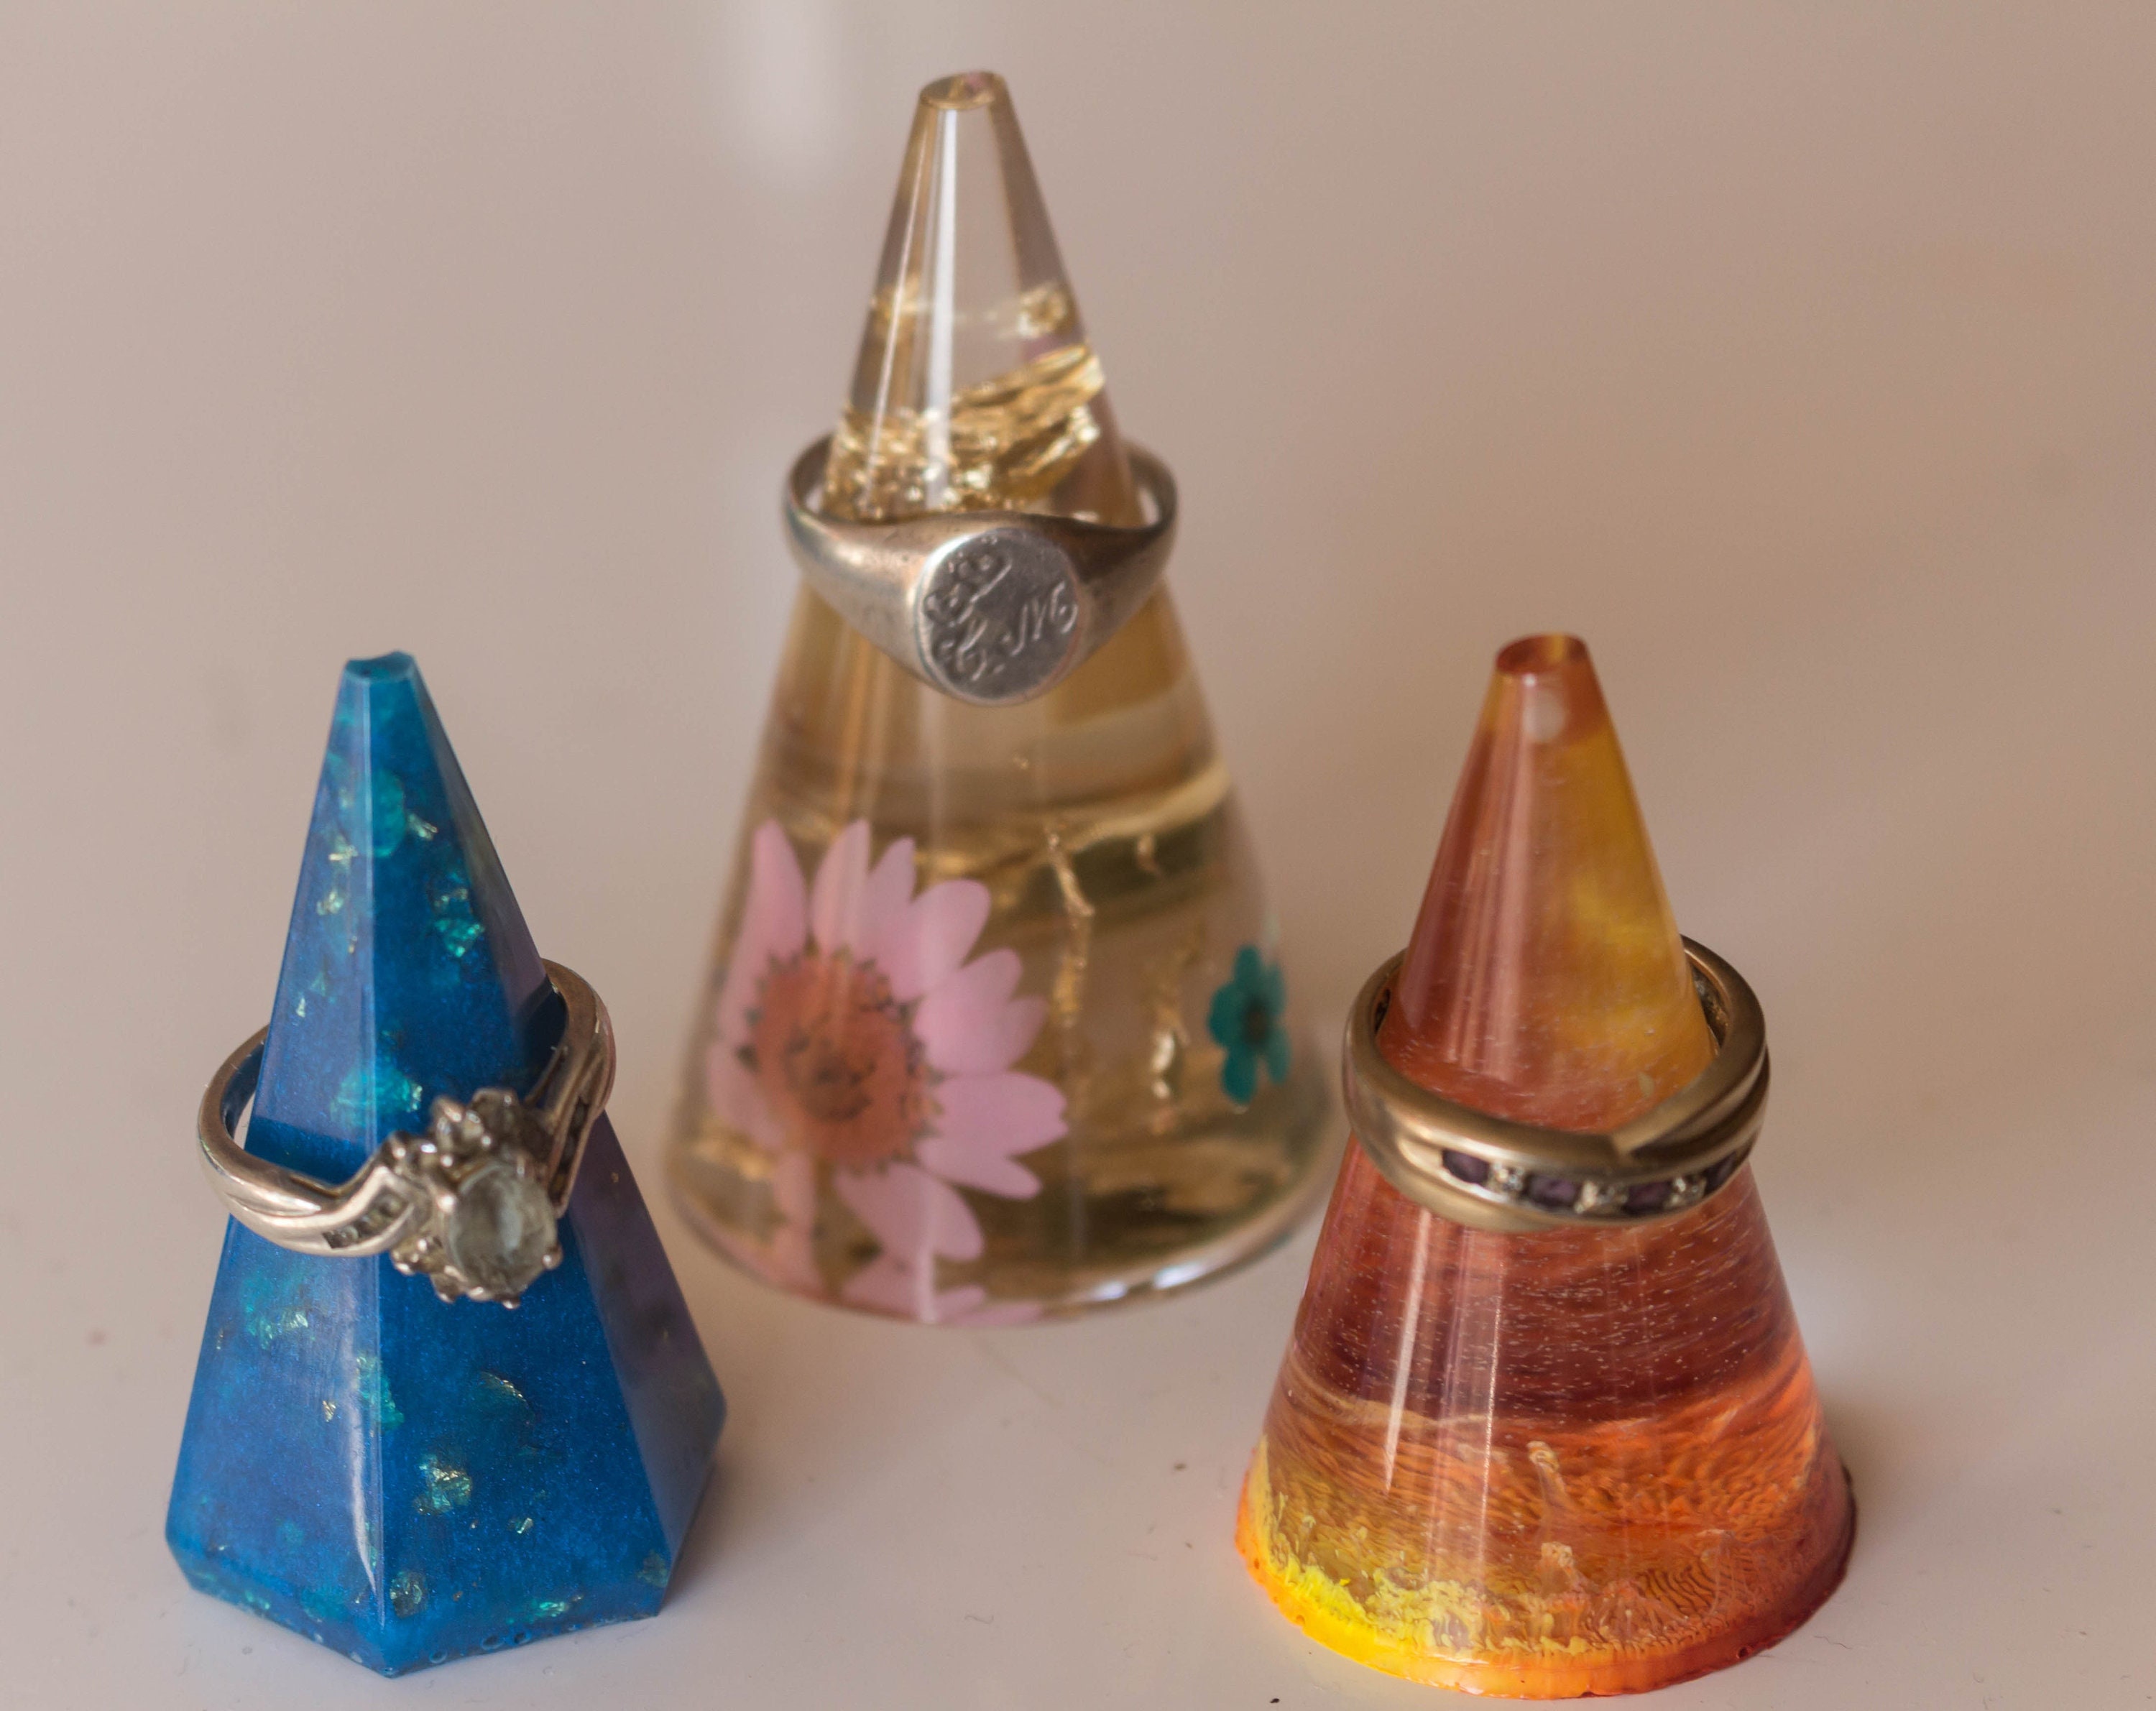 Gemstones for Kids Arts and Crafts, Loose Gemstones Craft Supplies